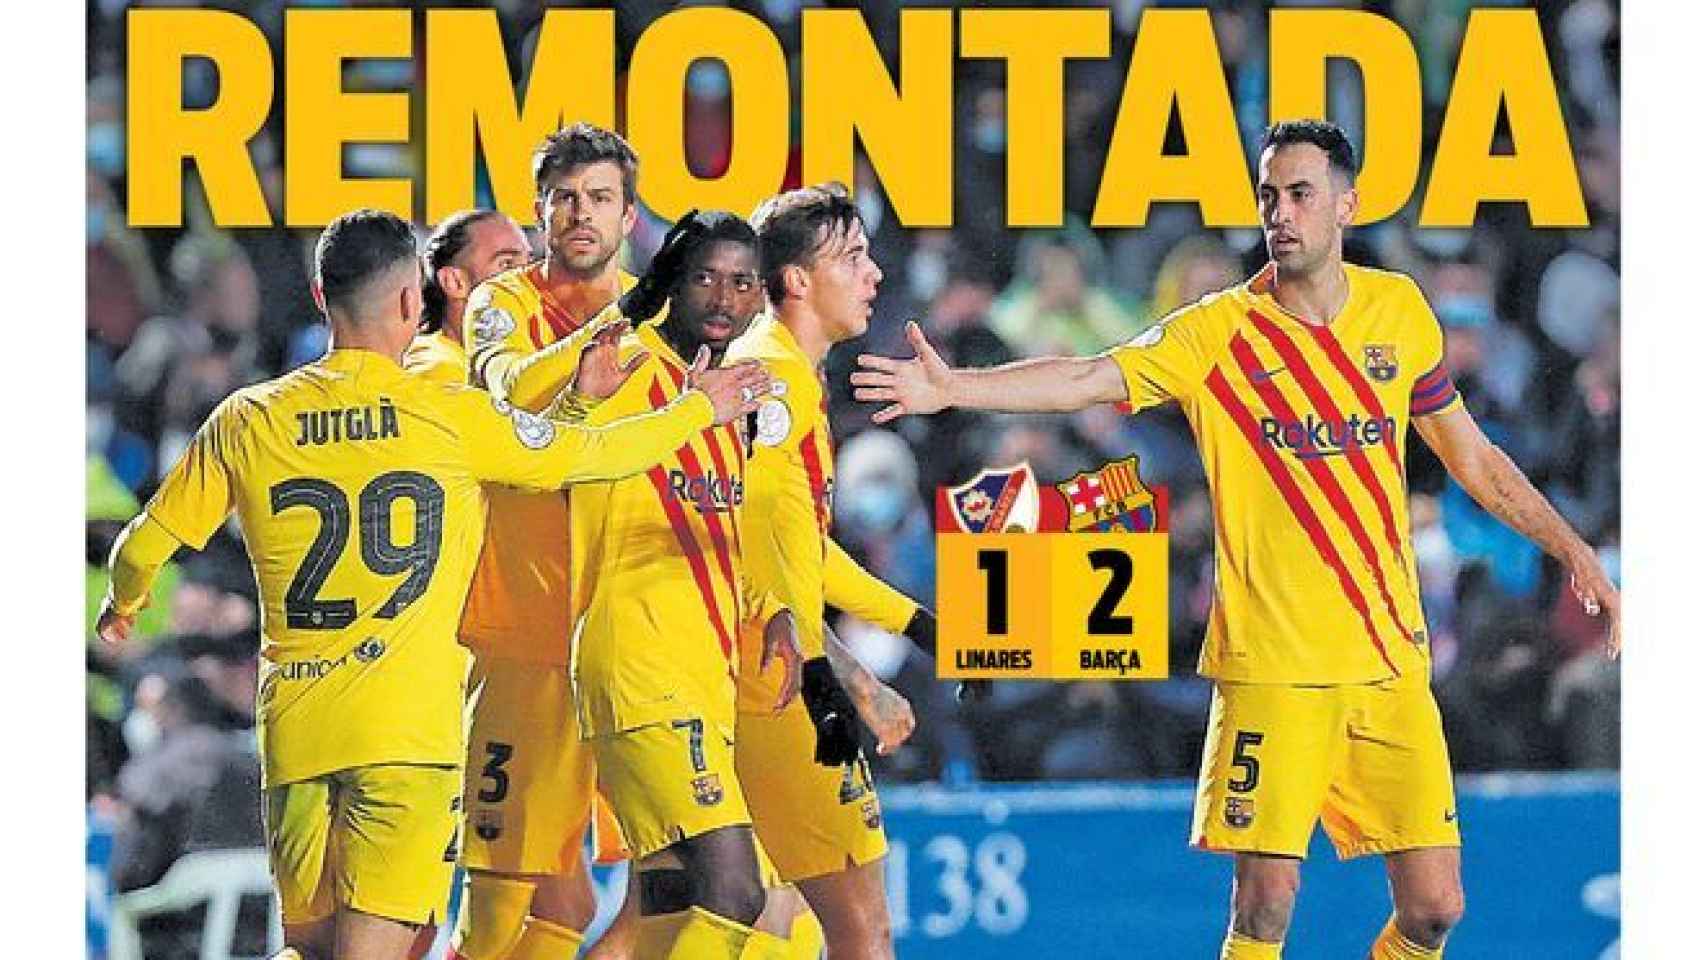 La portada del diario Sport (06/01/2022)